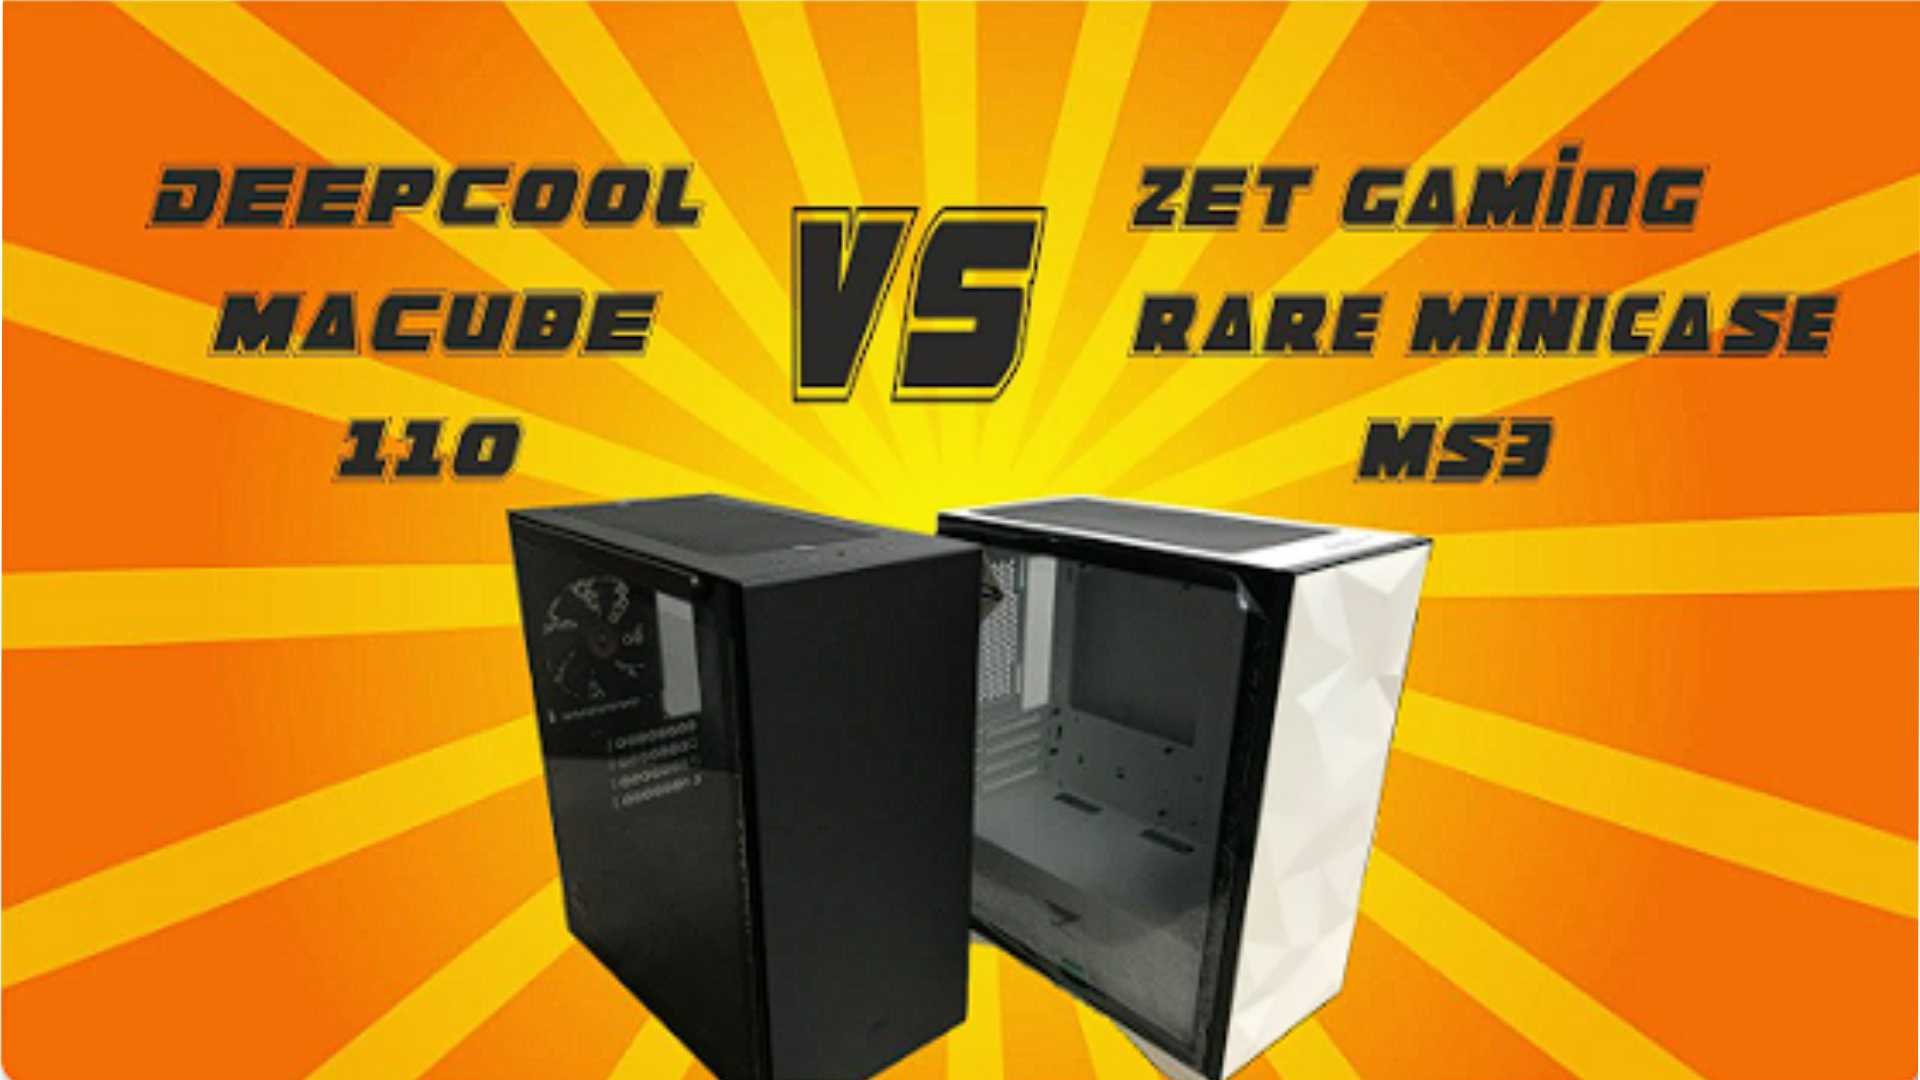 Ardor gaming minicase ms2 bg